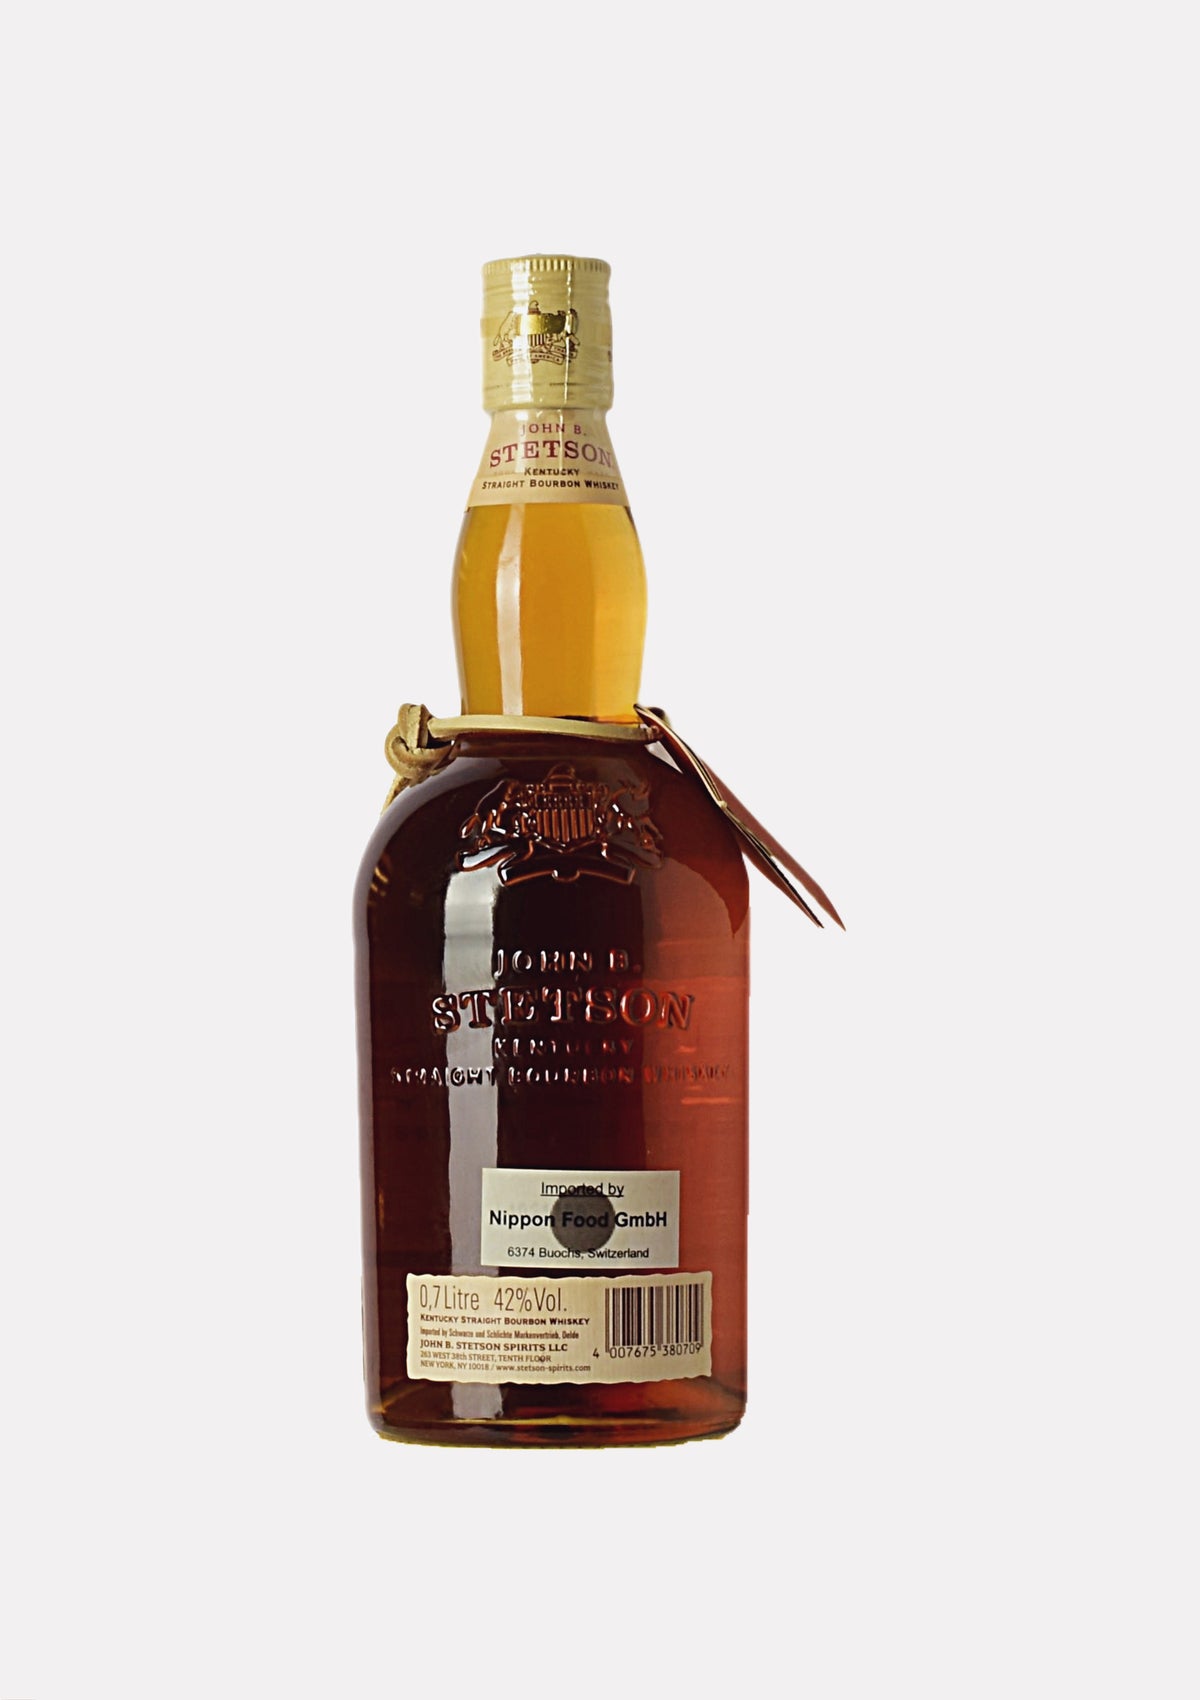 John B. Stetson Kentucky Straight Bourbon Whiskey